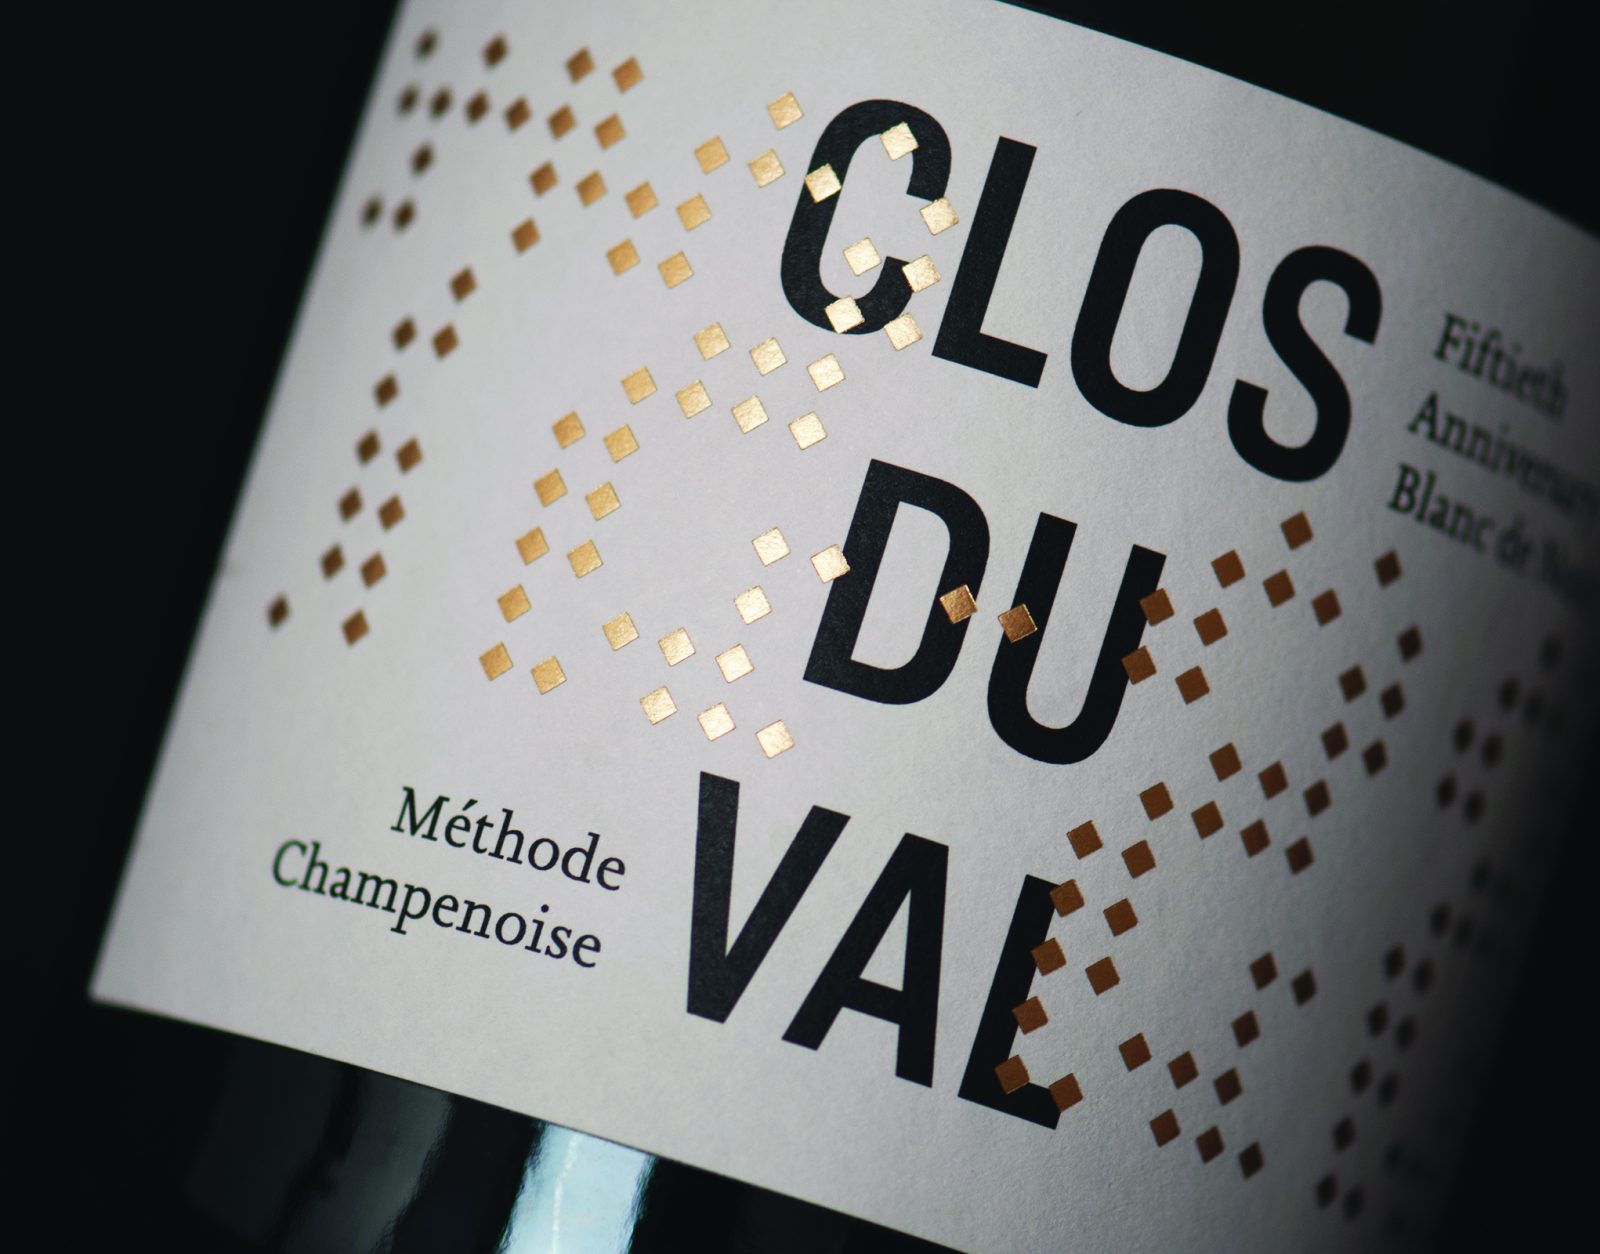 Clos du Val 50th Anniversary Blanc de Noirs Packaging and Logo Design